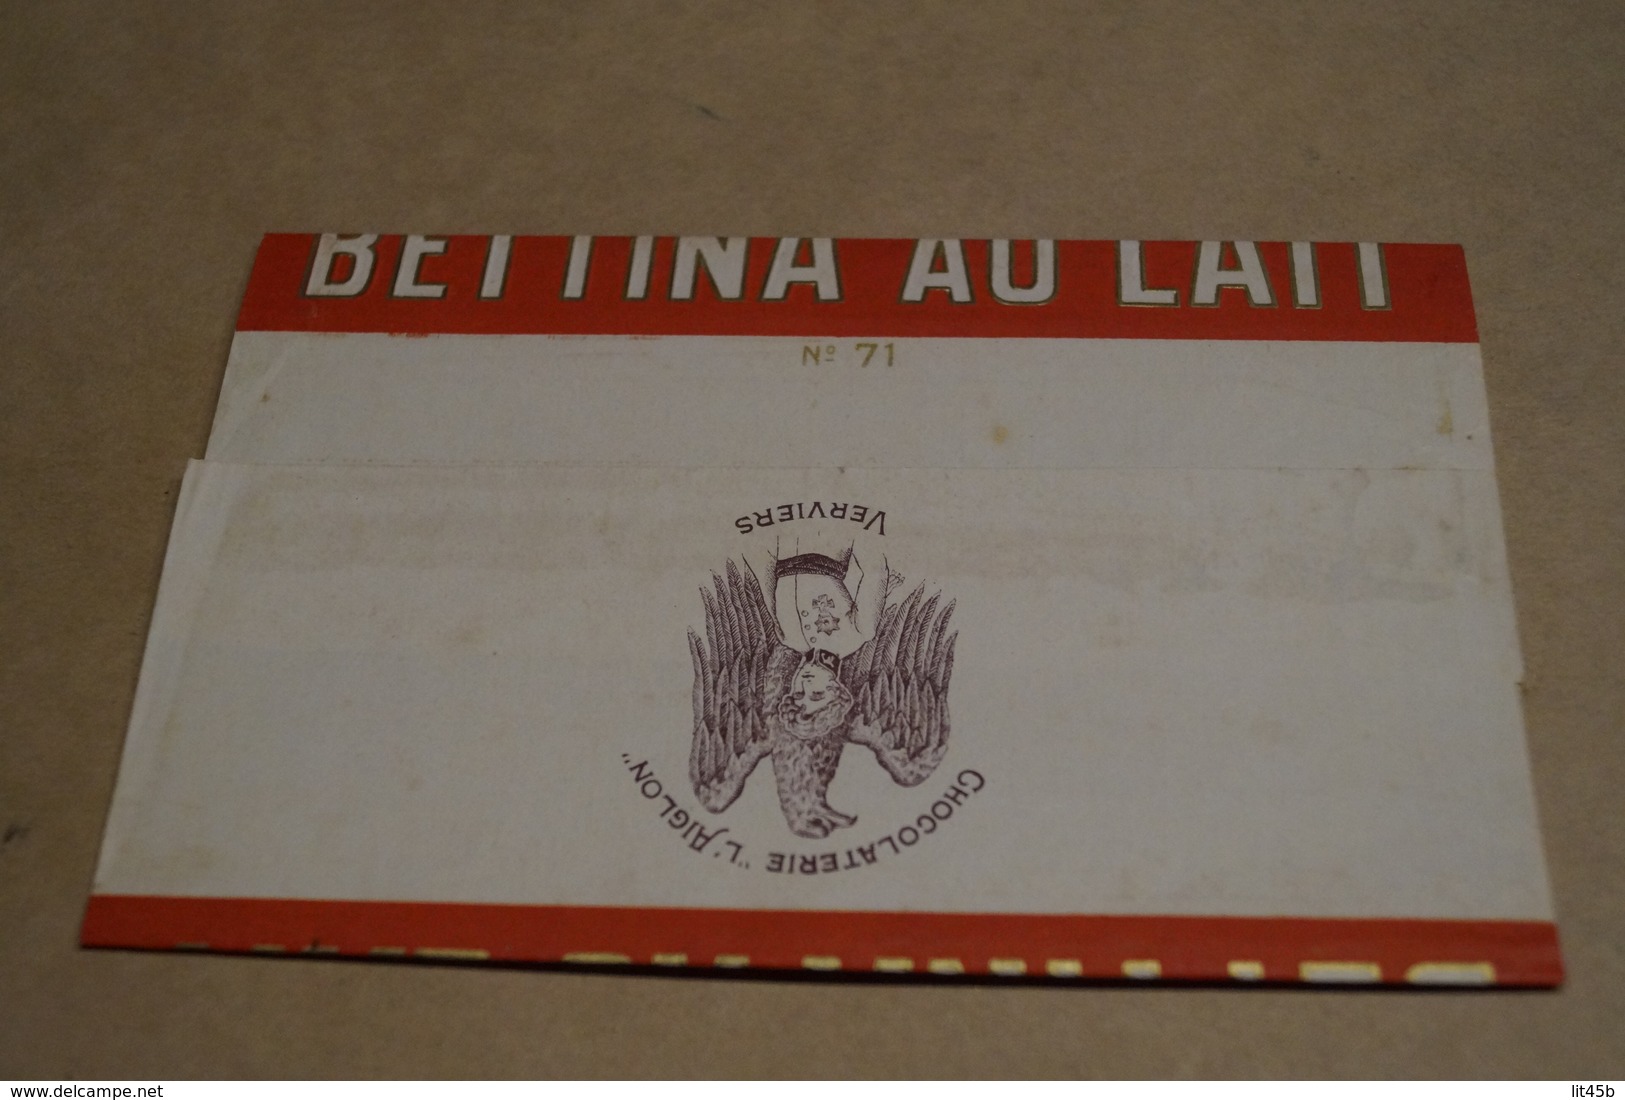 Ancien Emballage Publicitaire Originale,Chocolat Bettina,Aiglon,Verviers,18 Cm. Sur 11 Cm.collector - Chocolat